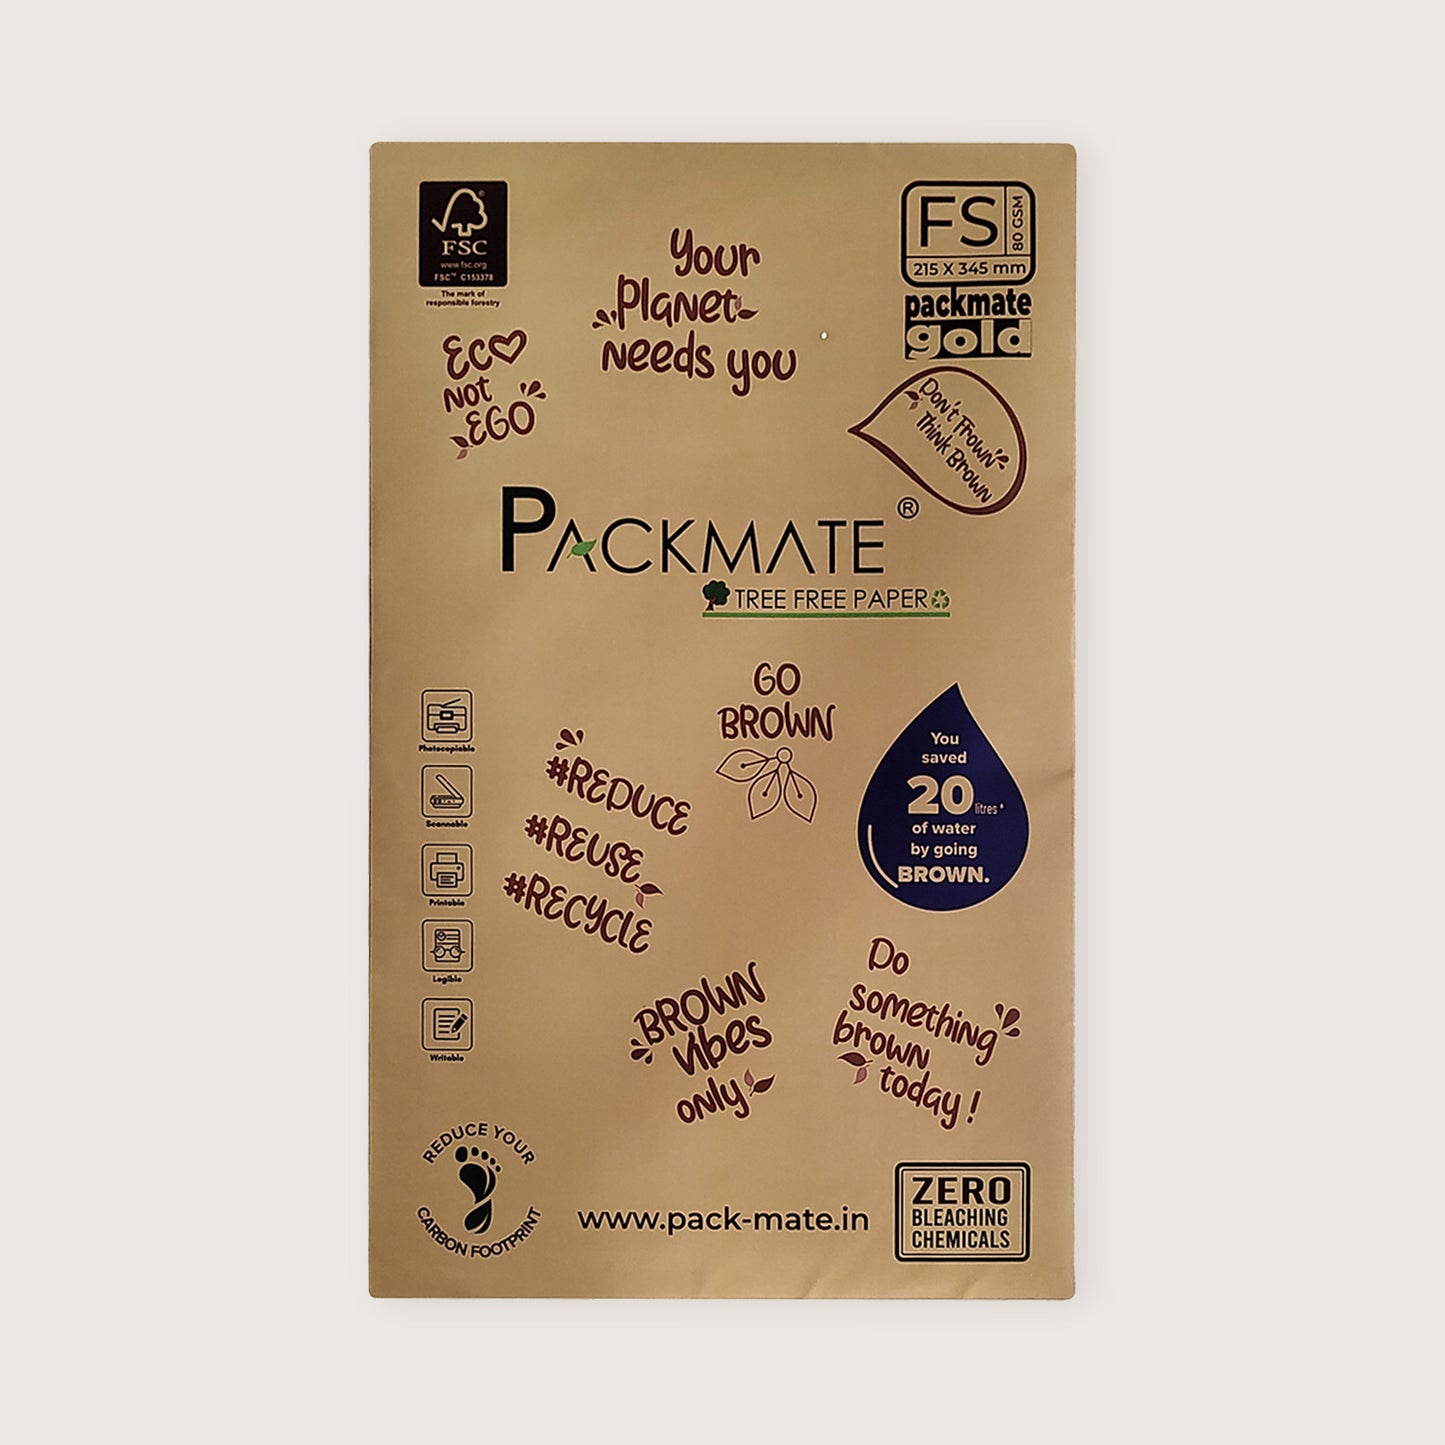 Packmate Gold Fotokopi Makinesi - FS, 1 Kağıt Topu, 500 Sayfa